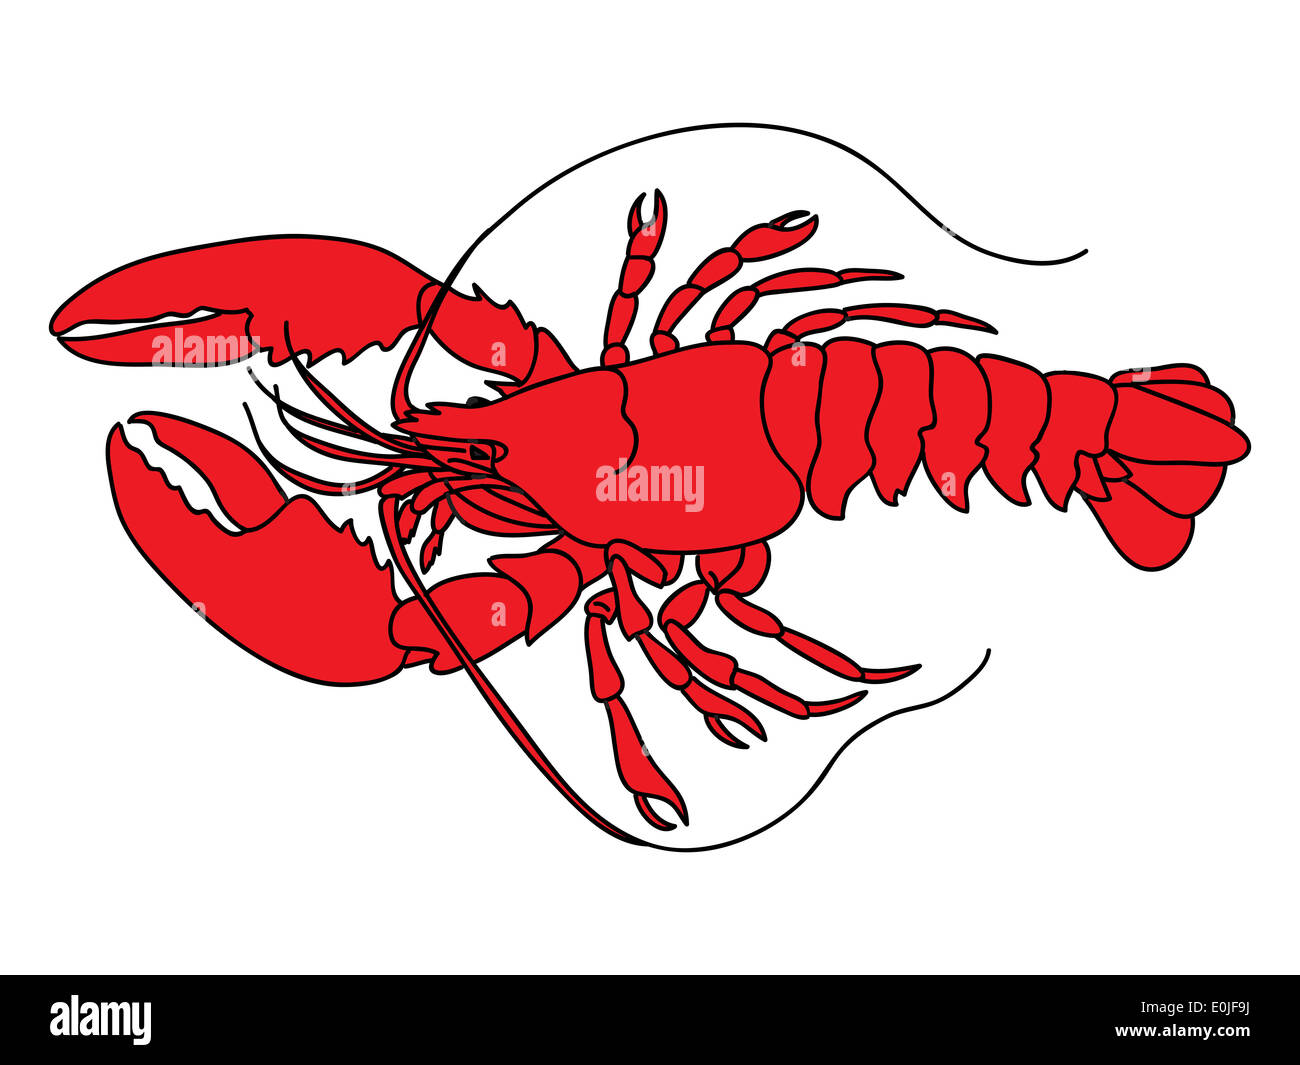 Lobster illustration Stock Photo